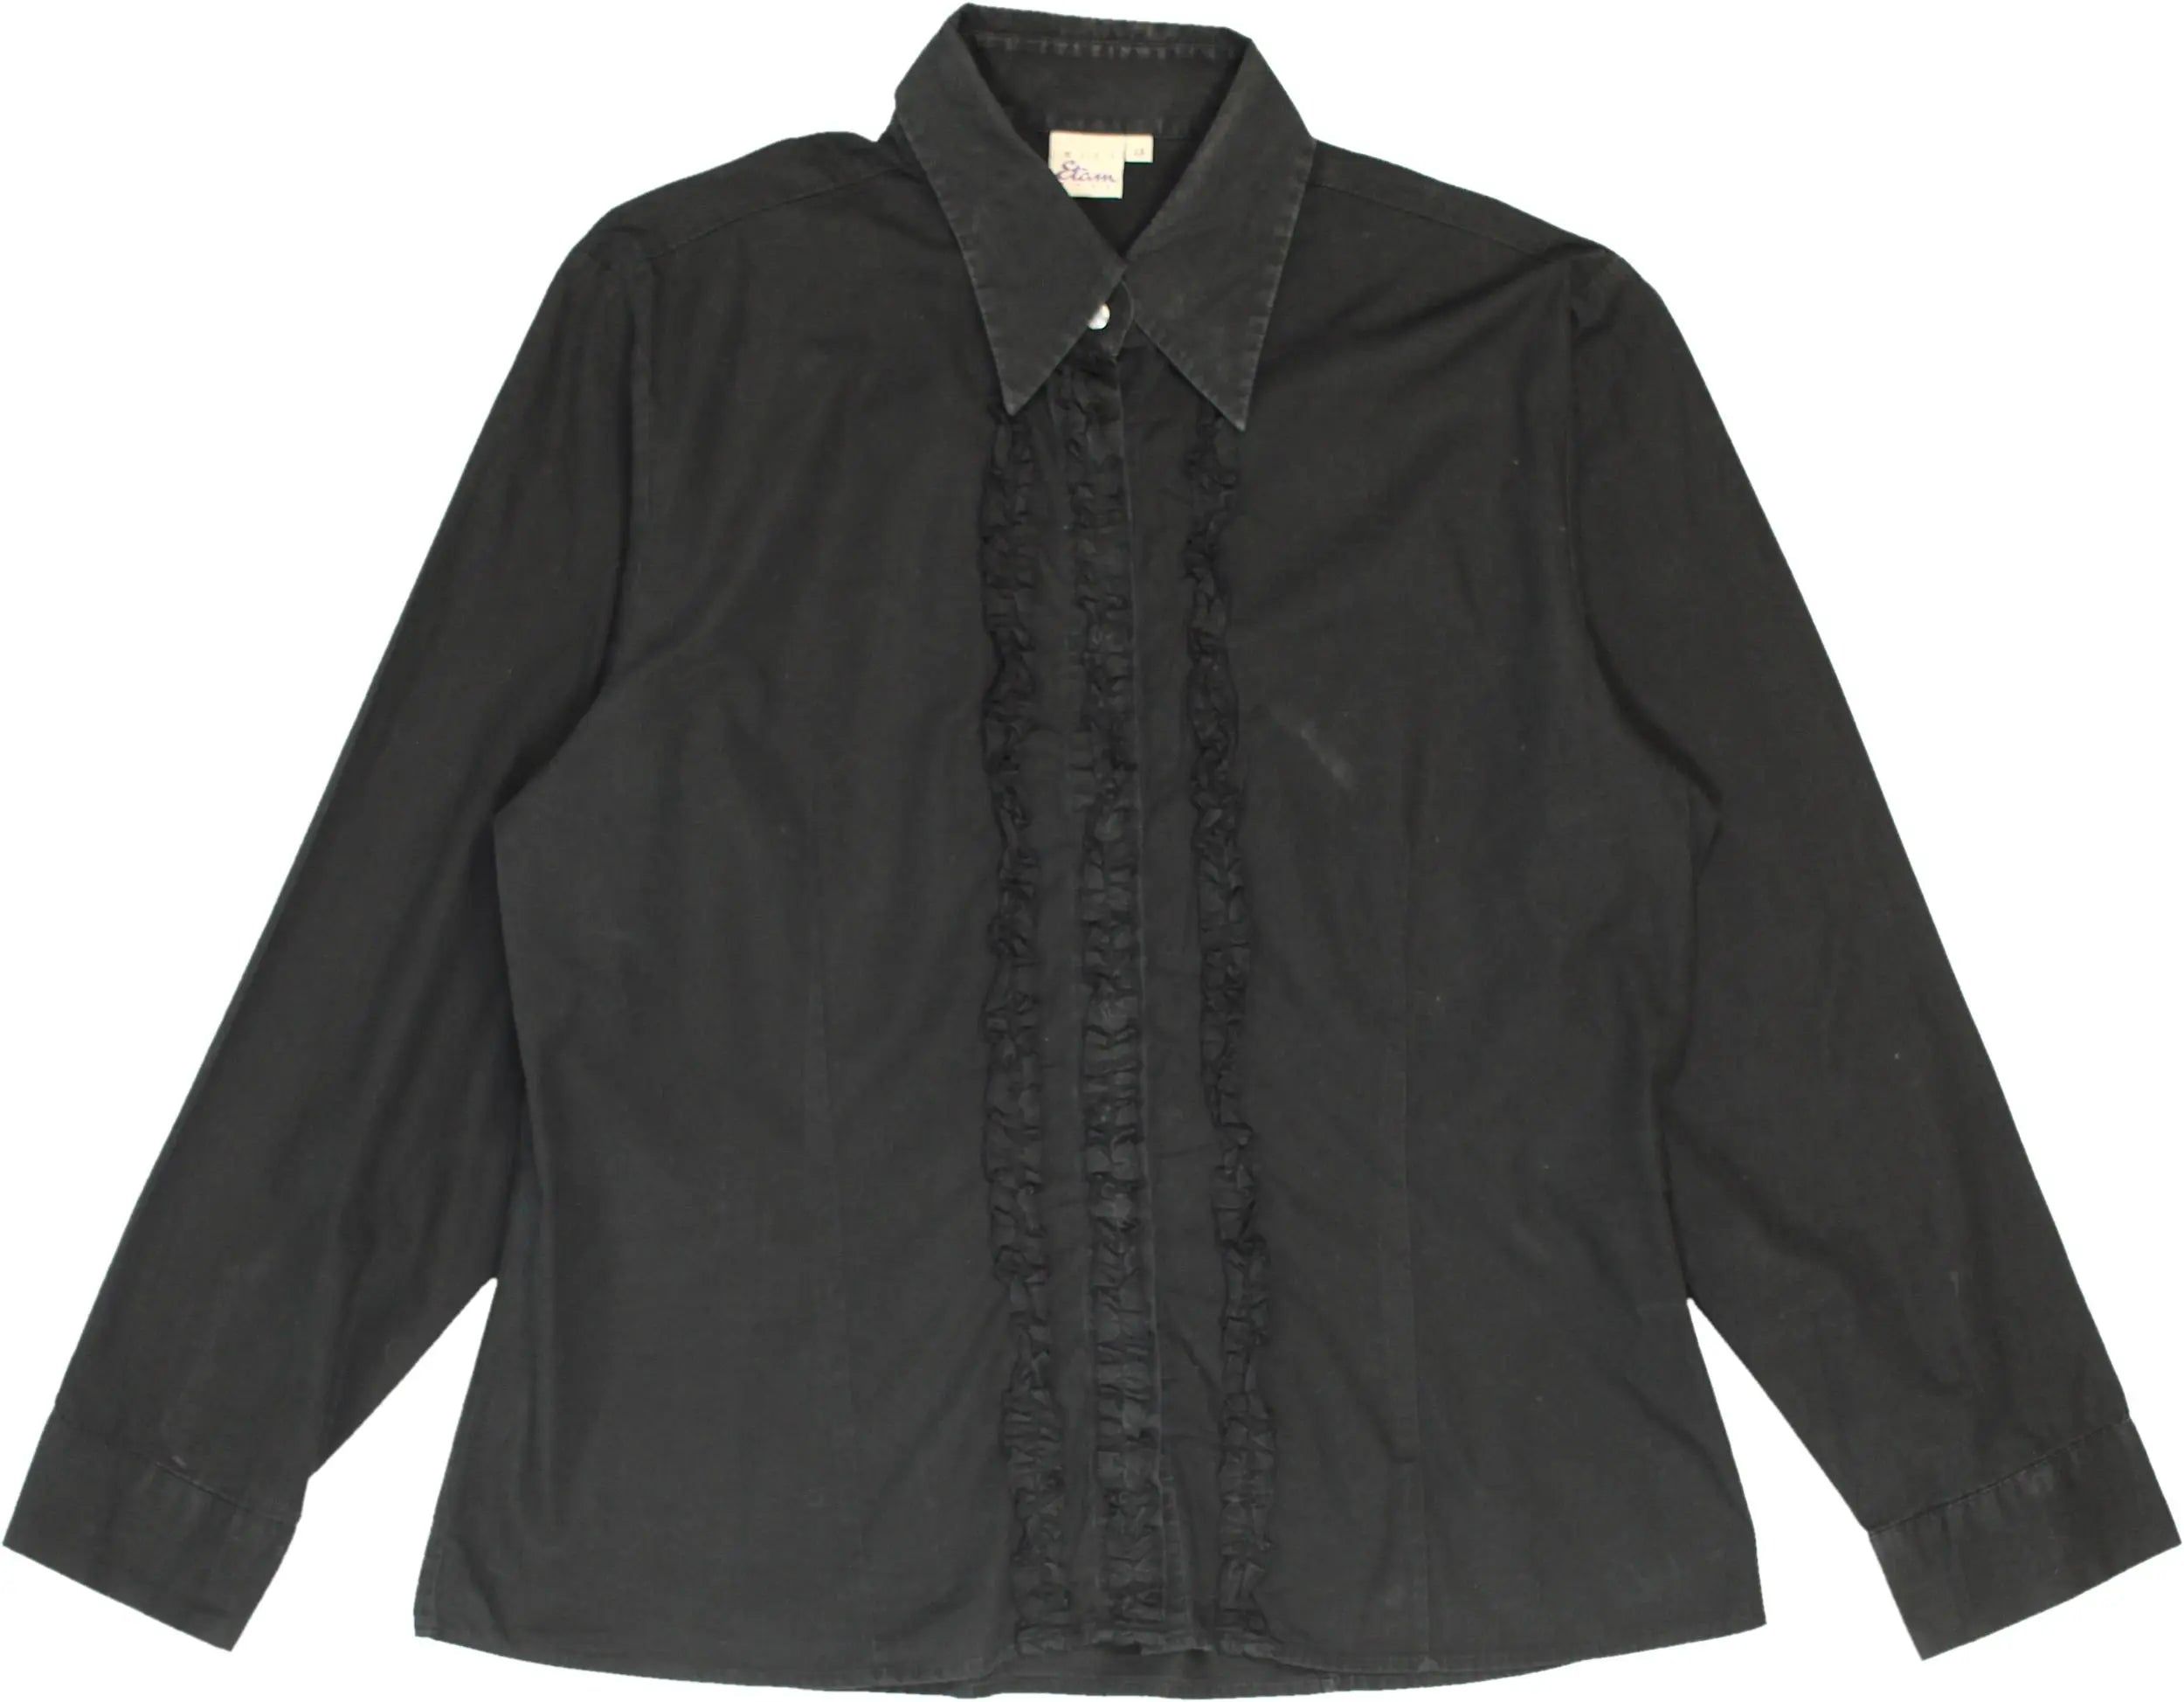 Miss Etam - Black Blouse- ThriftTale.com - Vintage and second handclothing